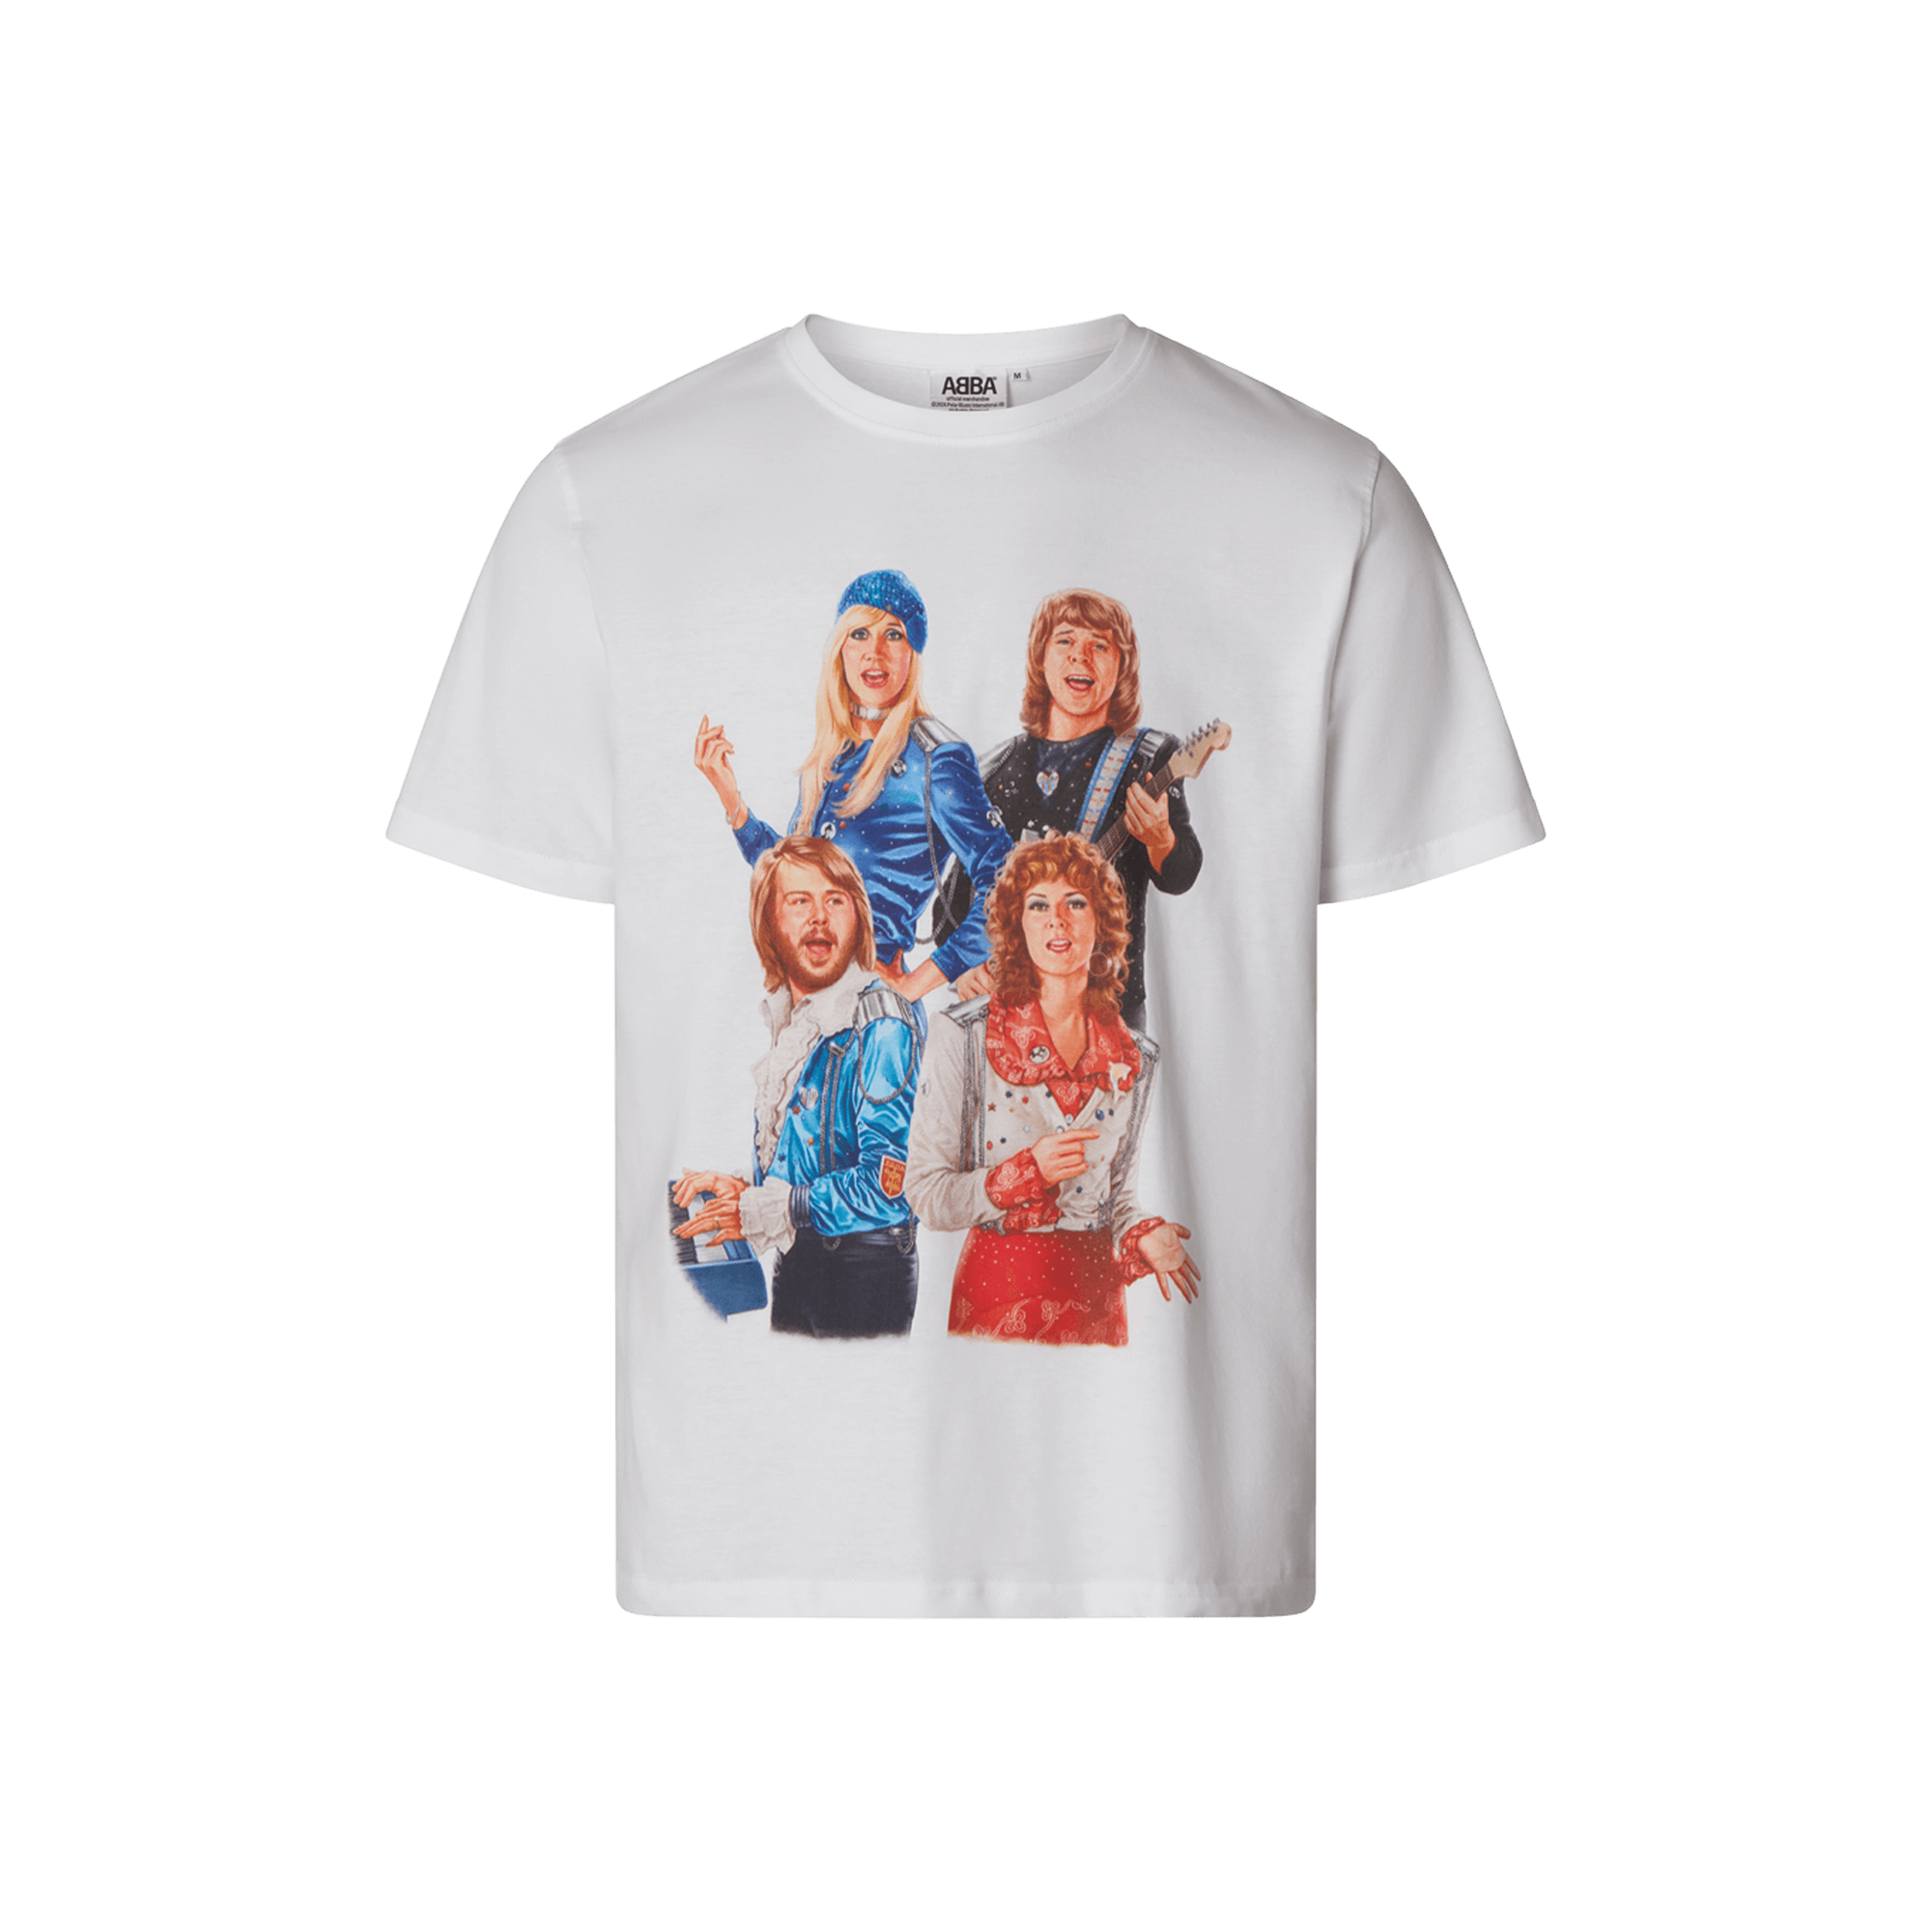 ABBA Waterloo illustration t-shirt